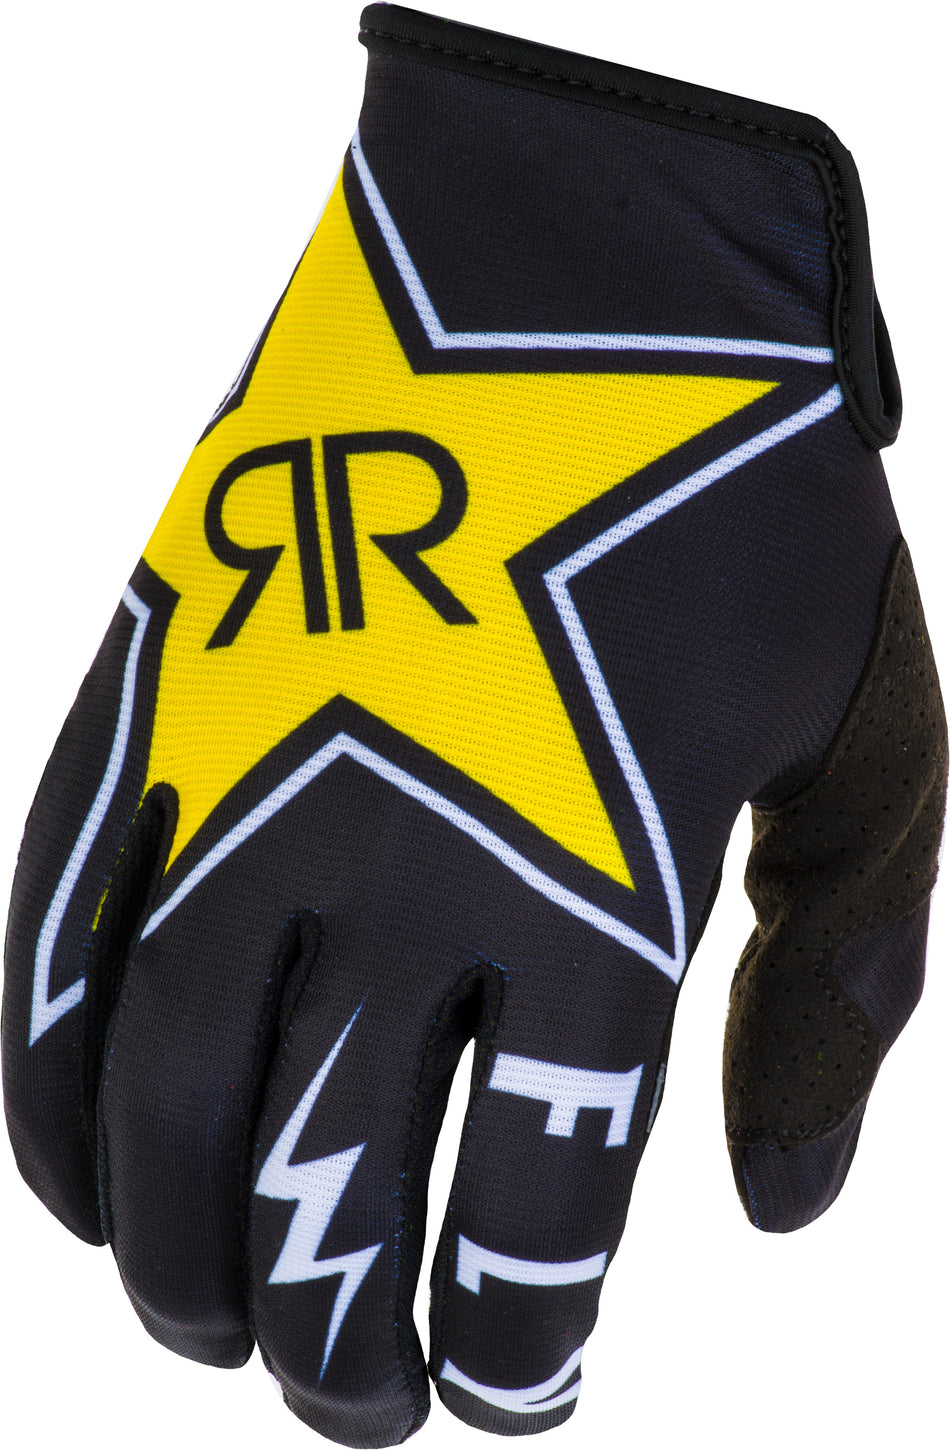 FLY RACING Lite Rockstar Gloves Black/White Sz 07 373-01307